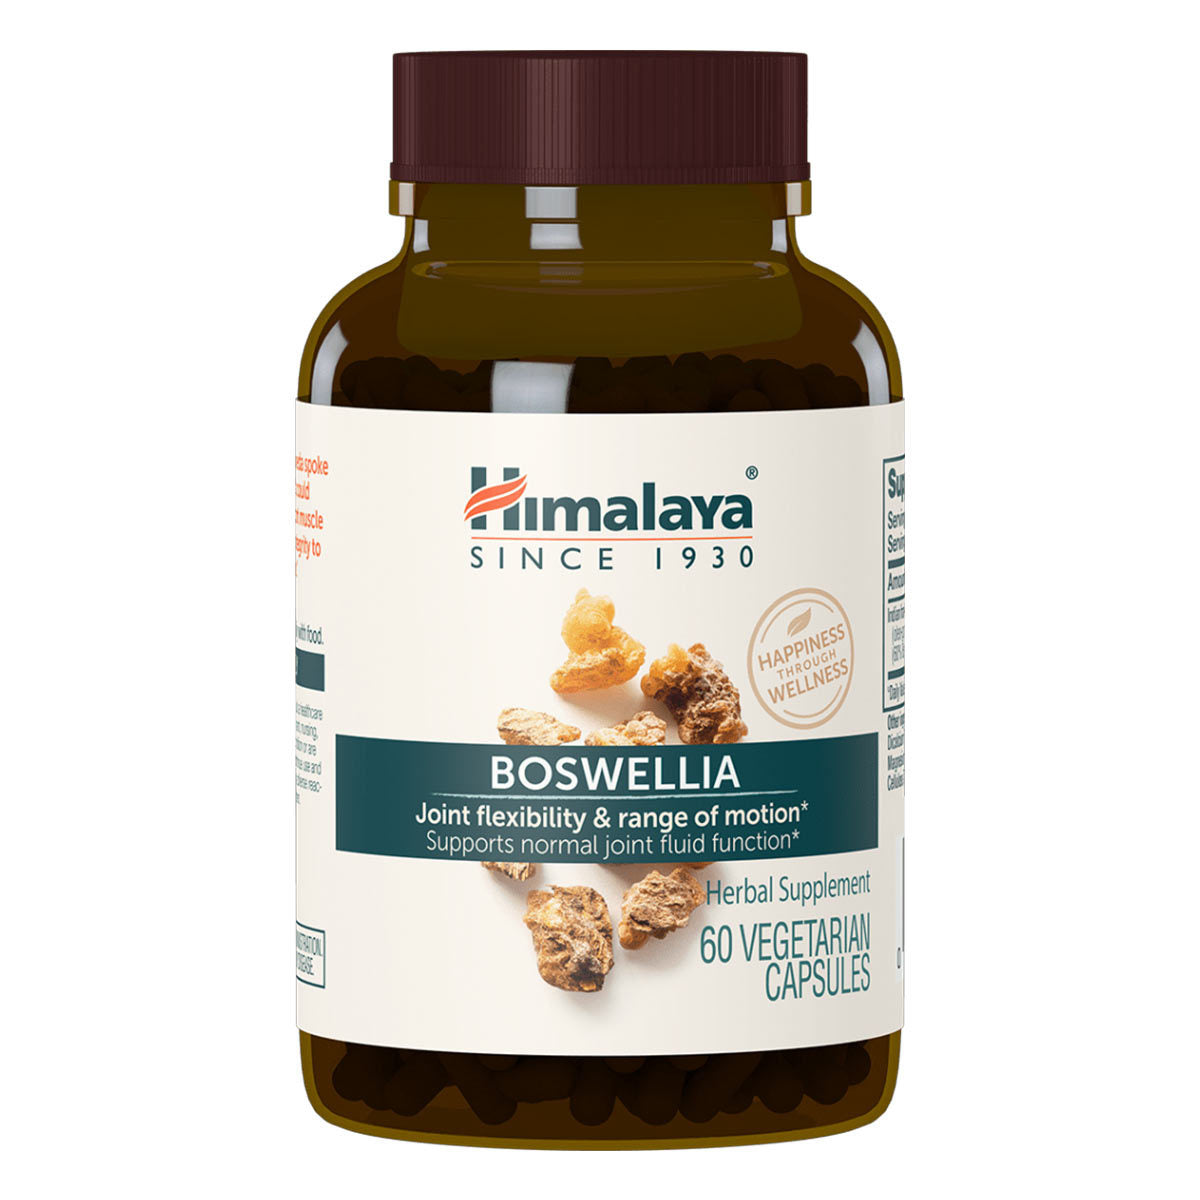 Primary image of Boswellia